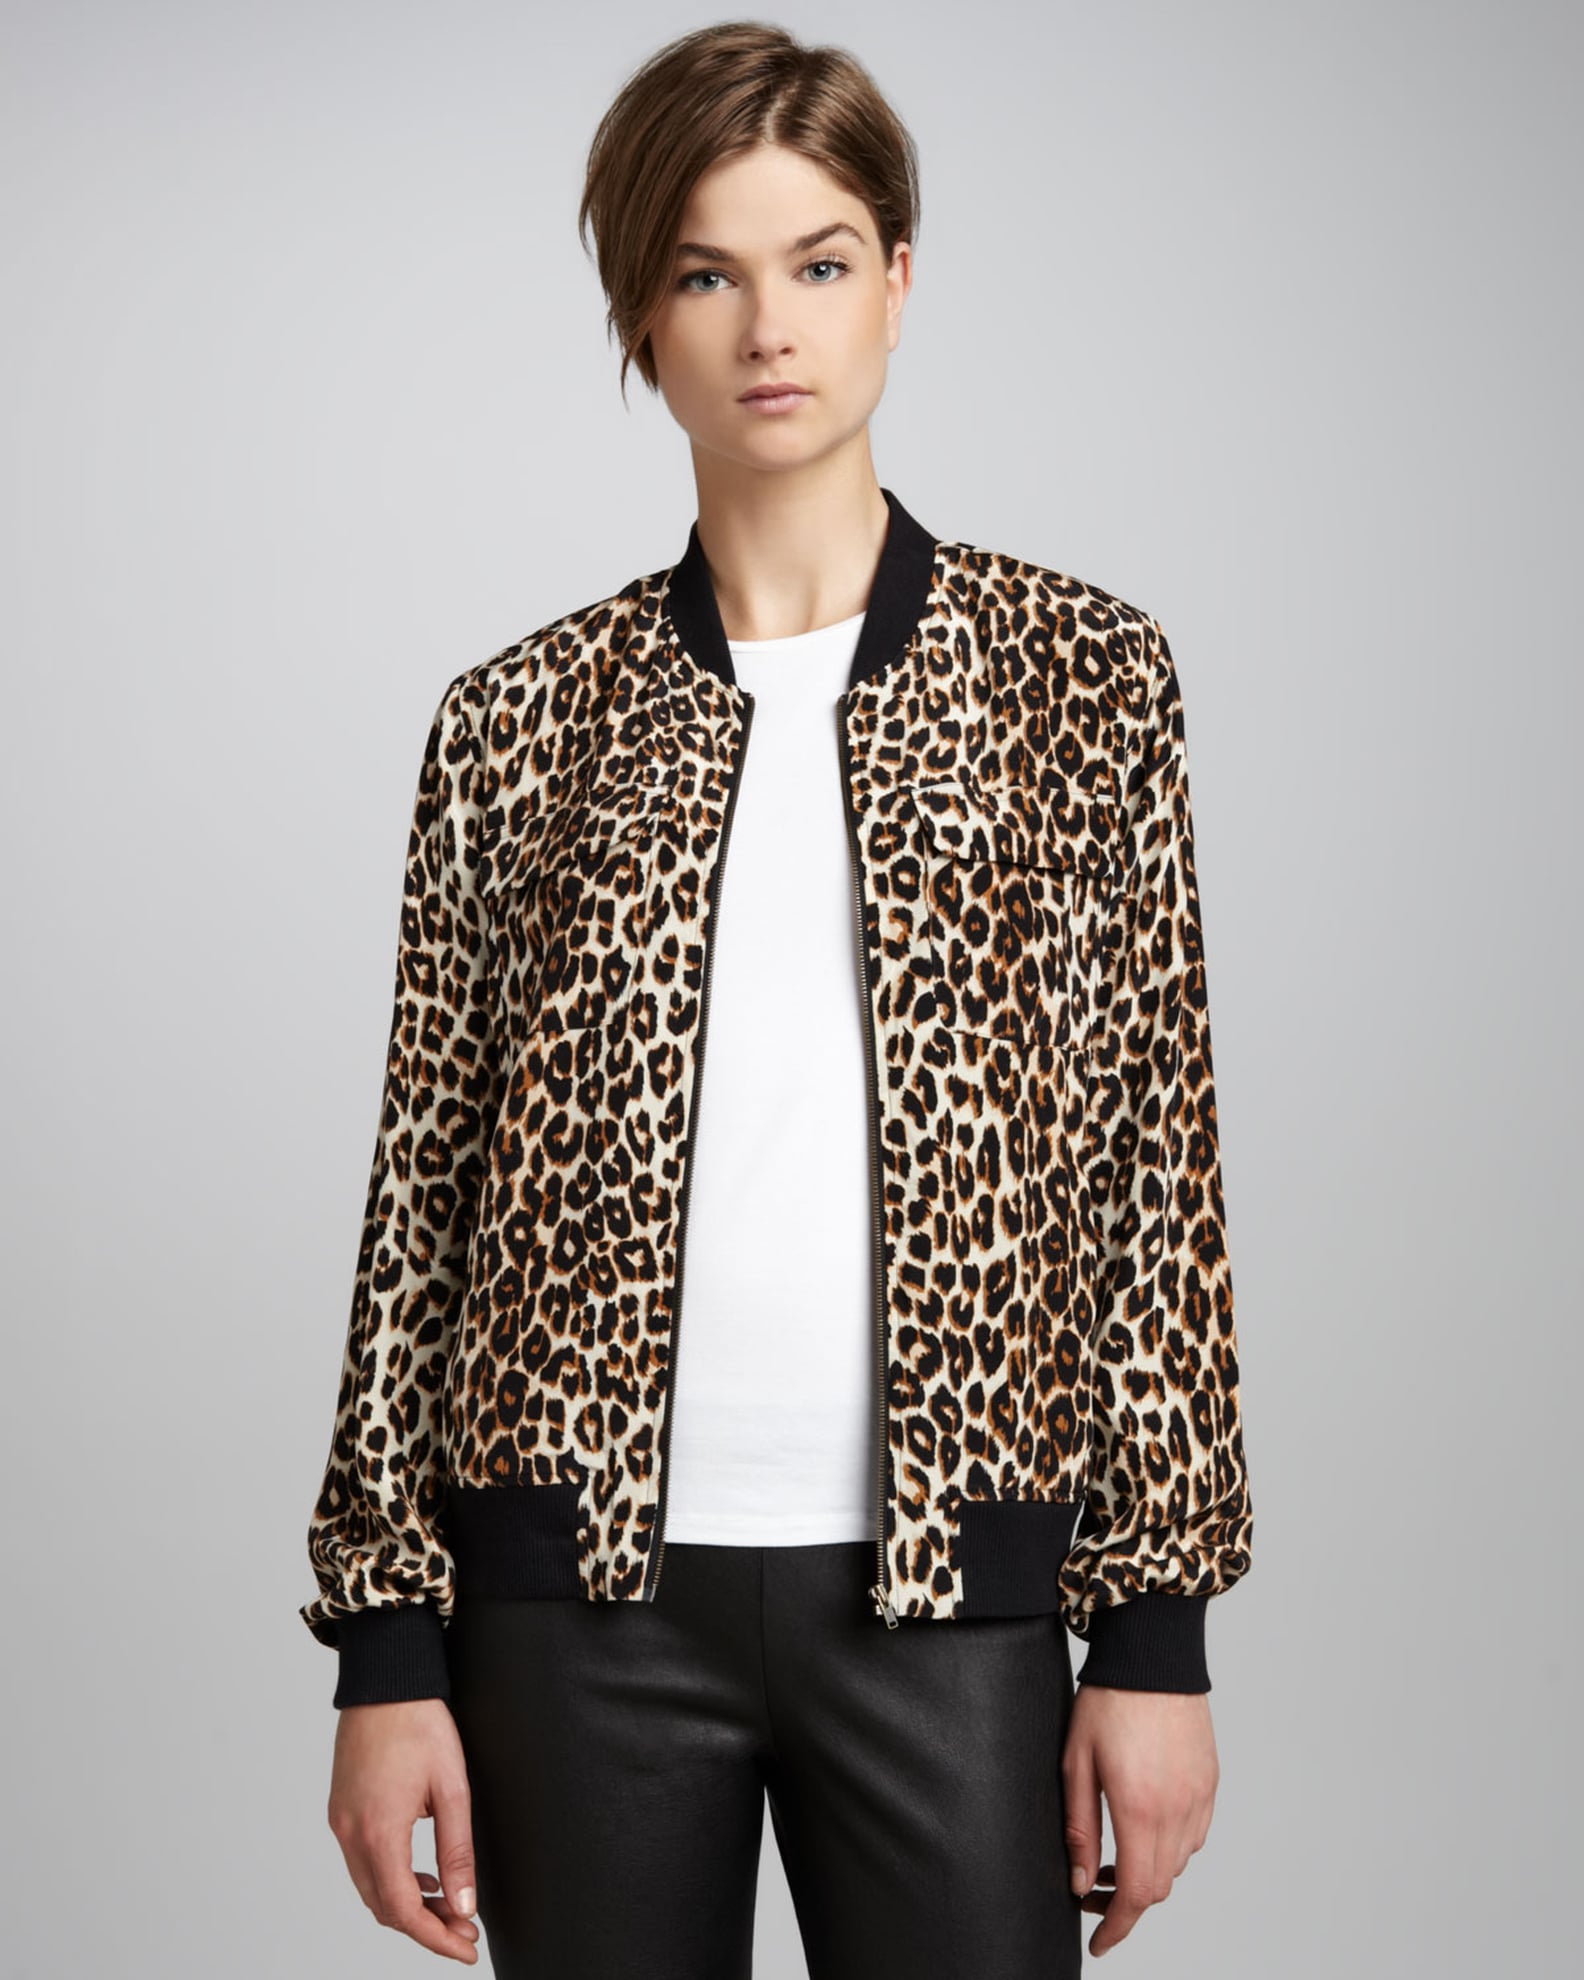 Coat Trends Fall 2013 | POPSUGAR Fashion